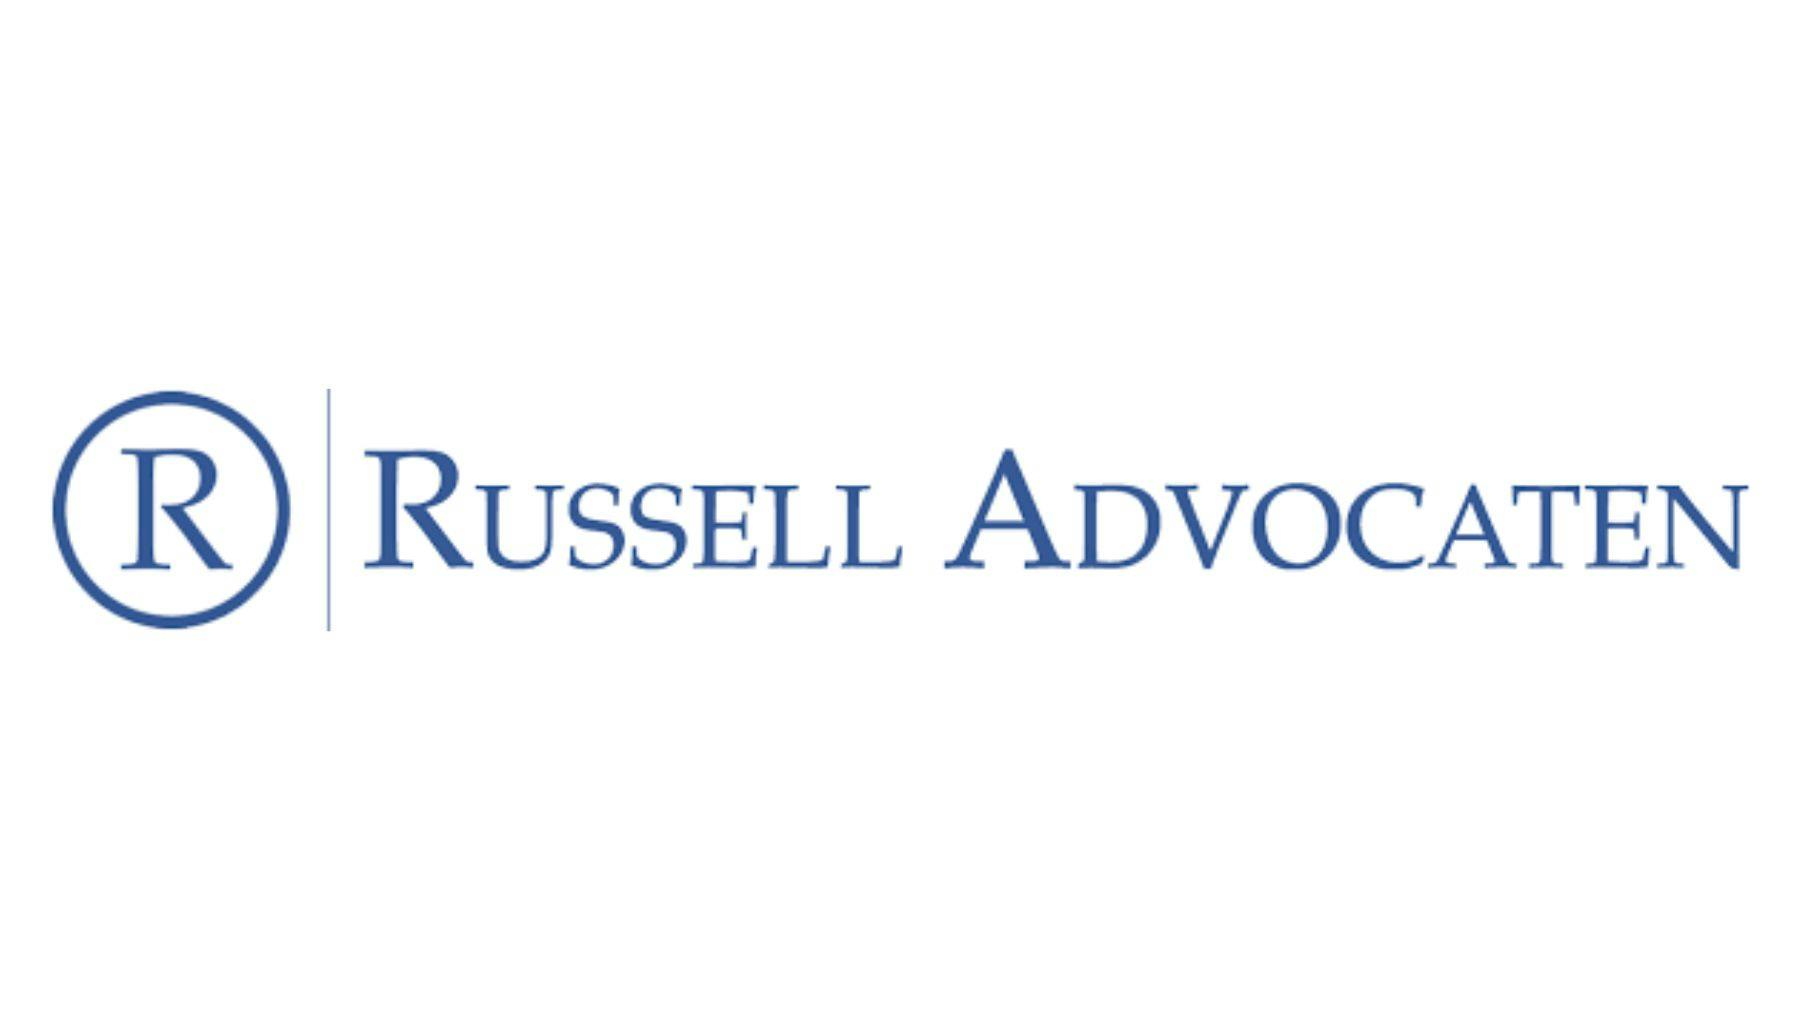 Russell Advocaten